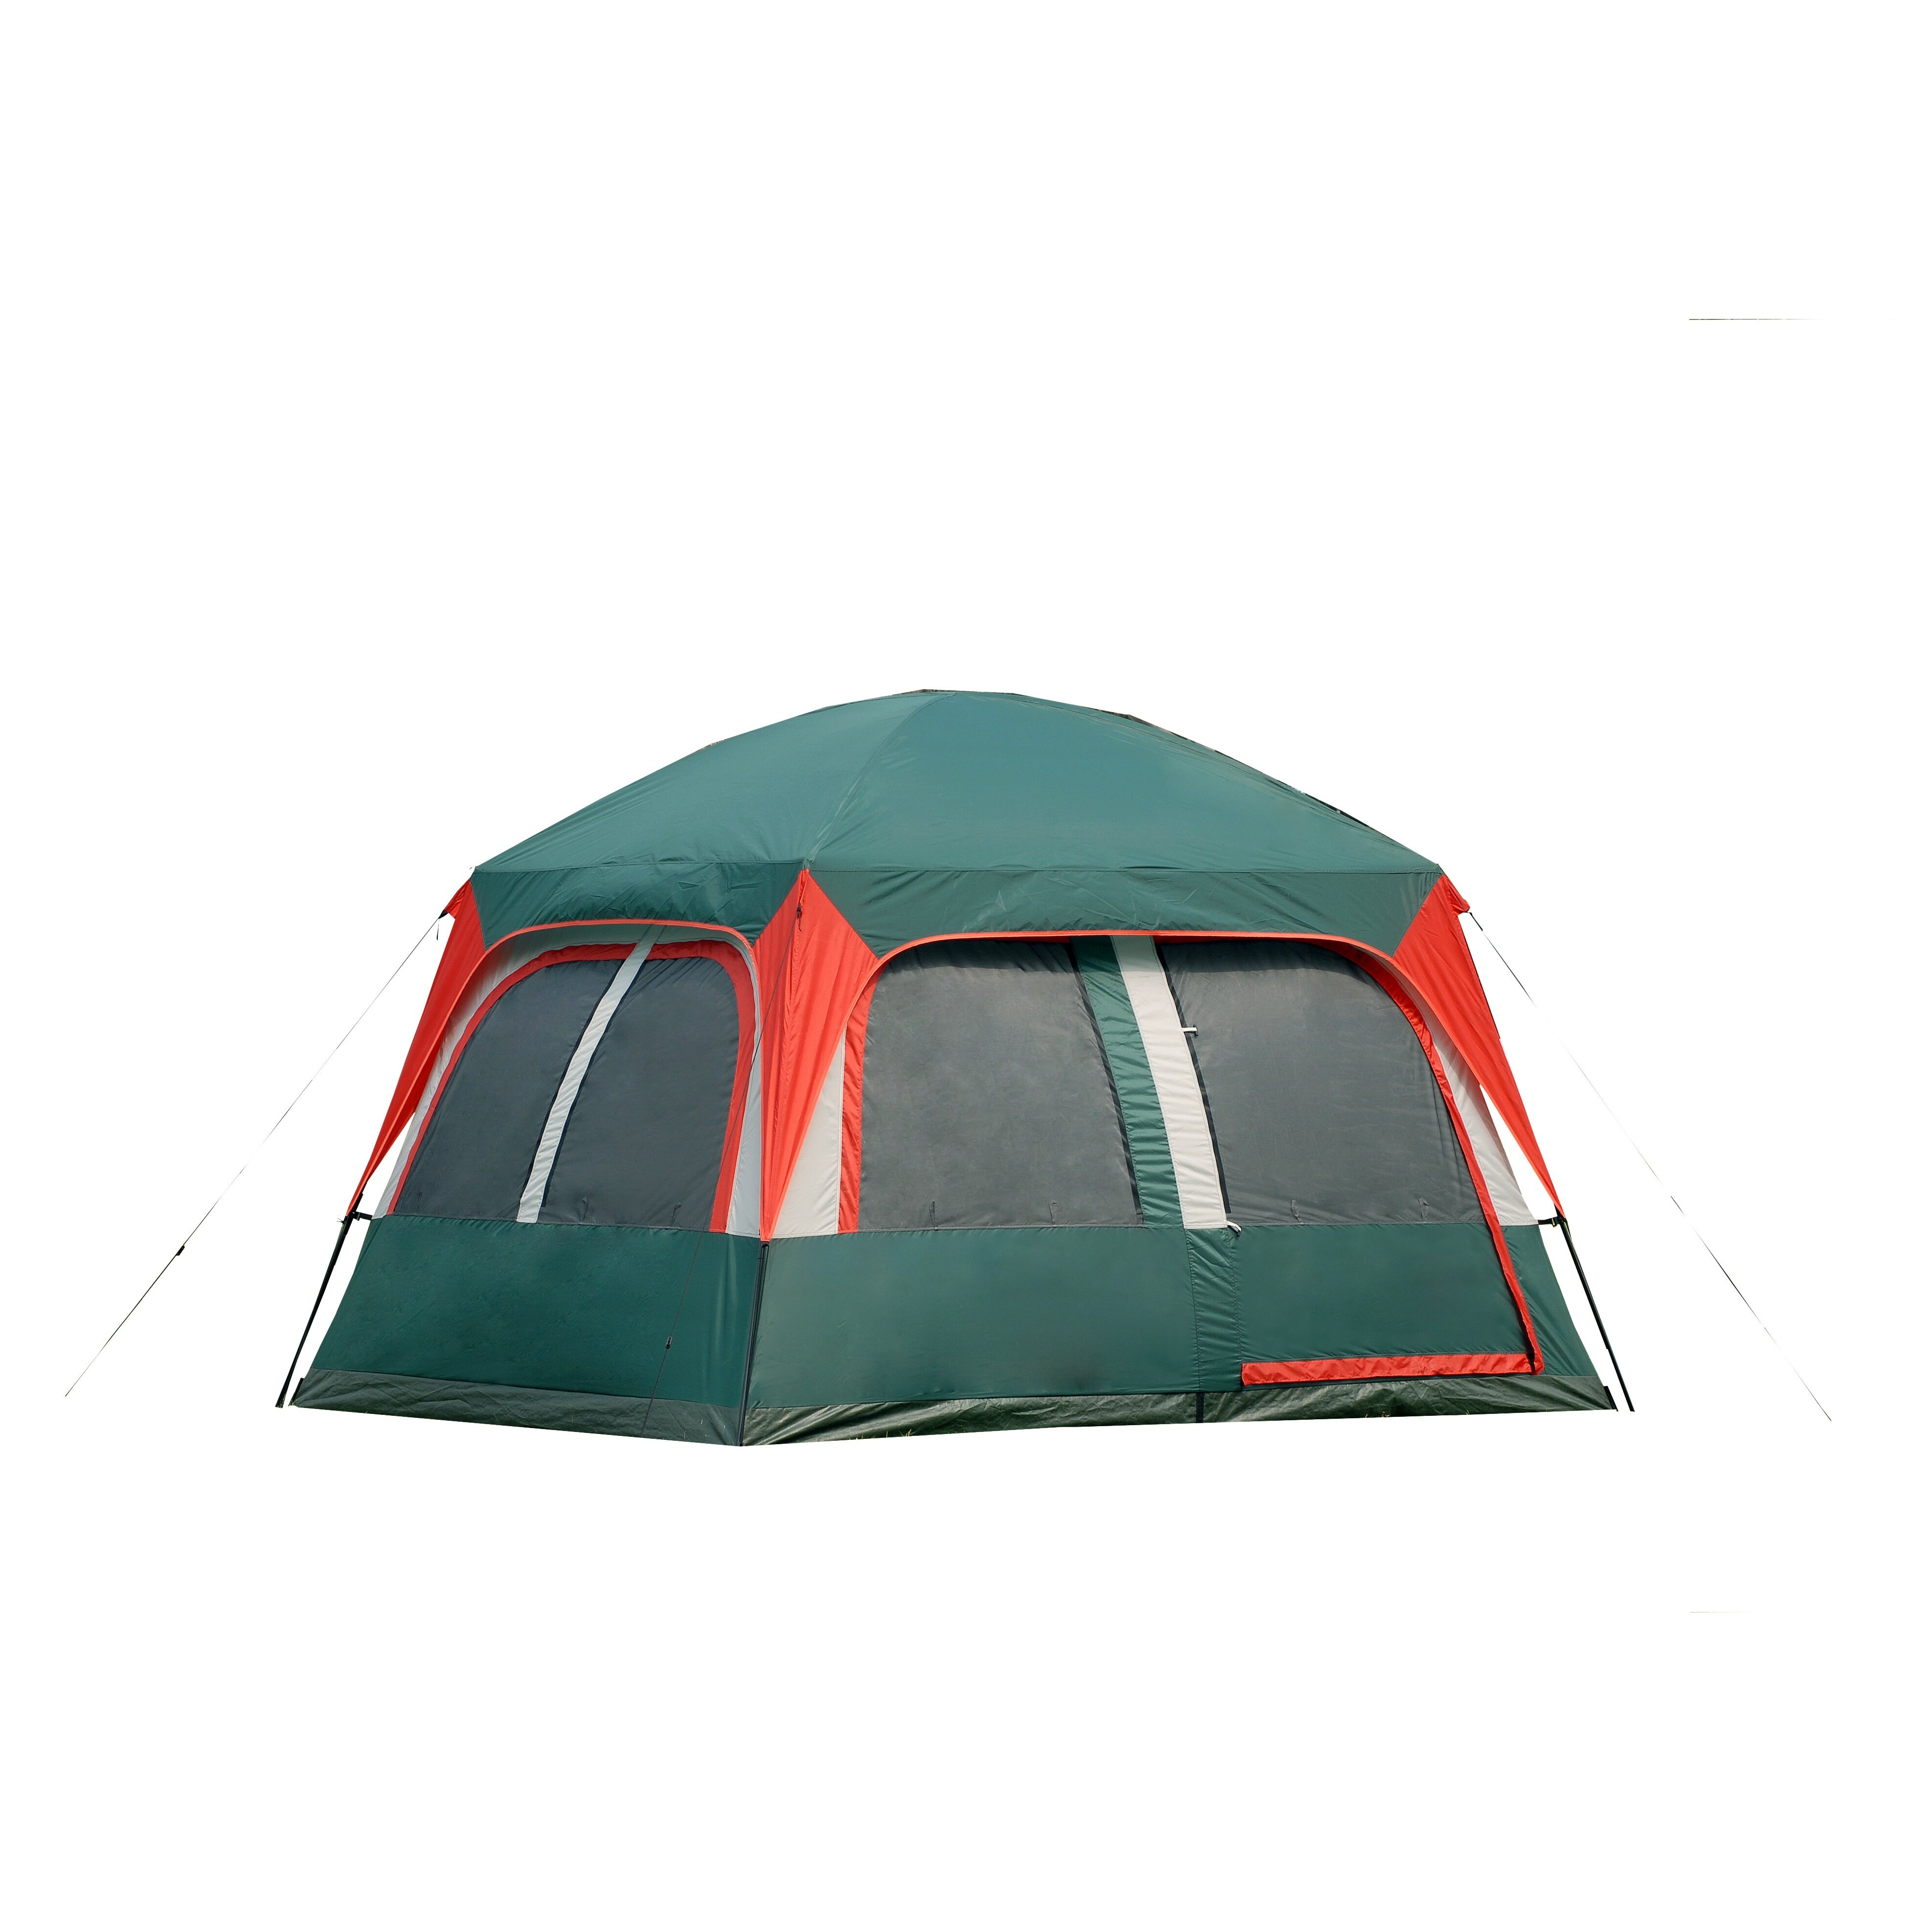 GigaTent Prospect Rock Family Dome Tent & Reviews | Wayfair